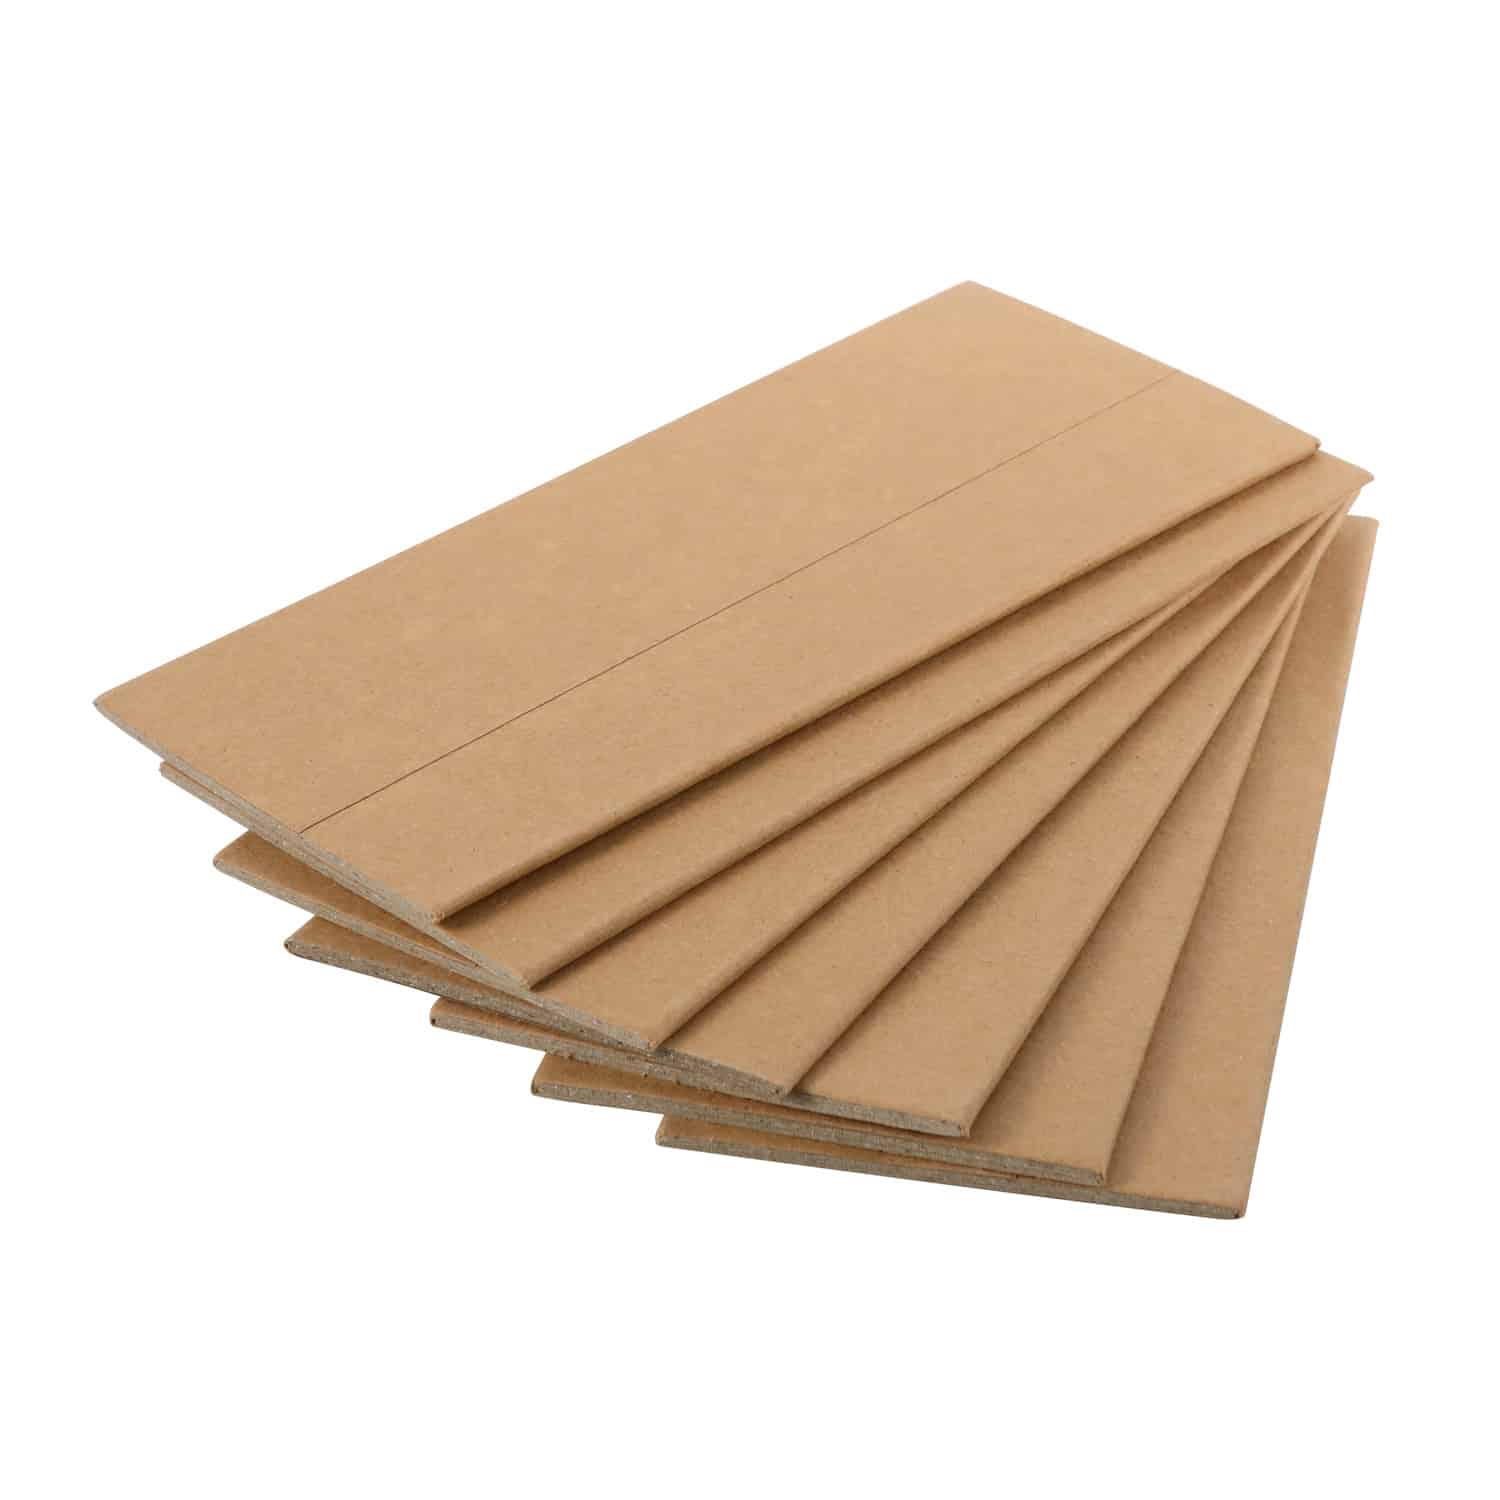 Thanh nẹp giấy phẳng (flatboard)